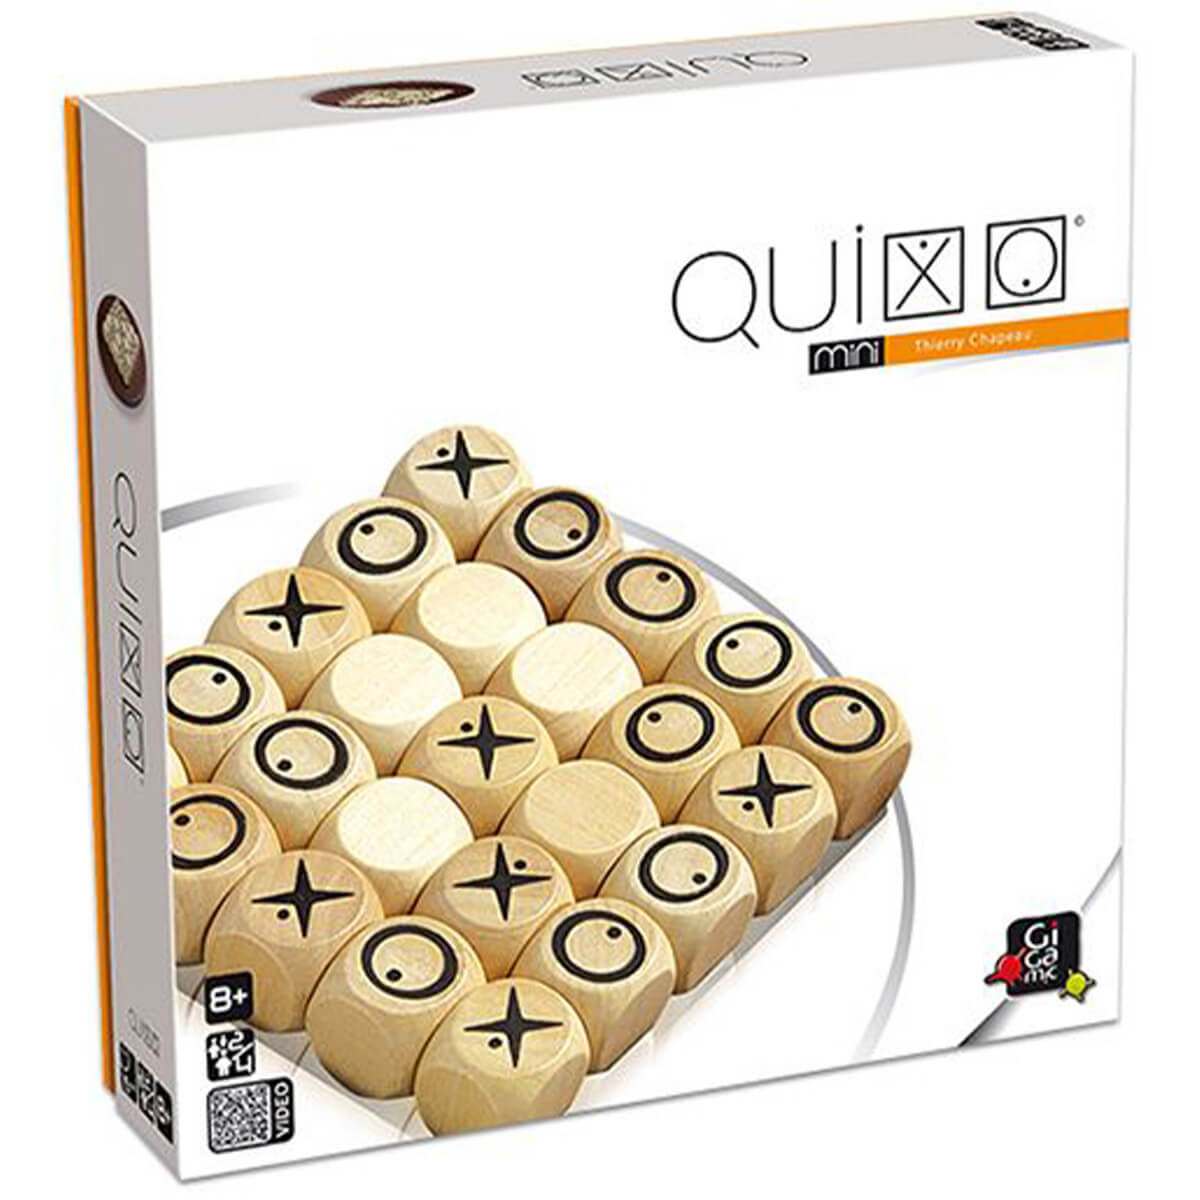 Quixo Mini Gigamic  Board Games.